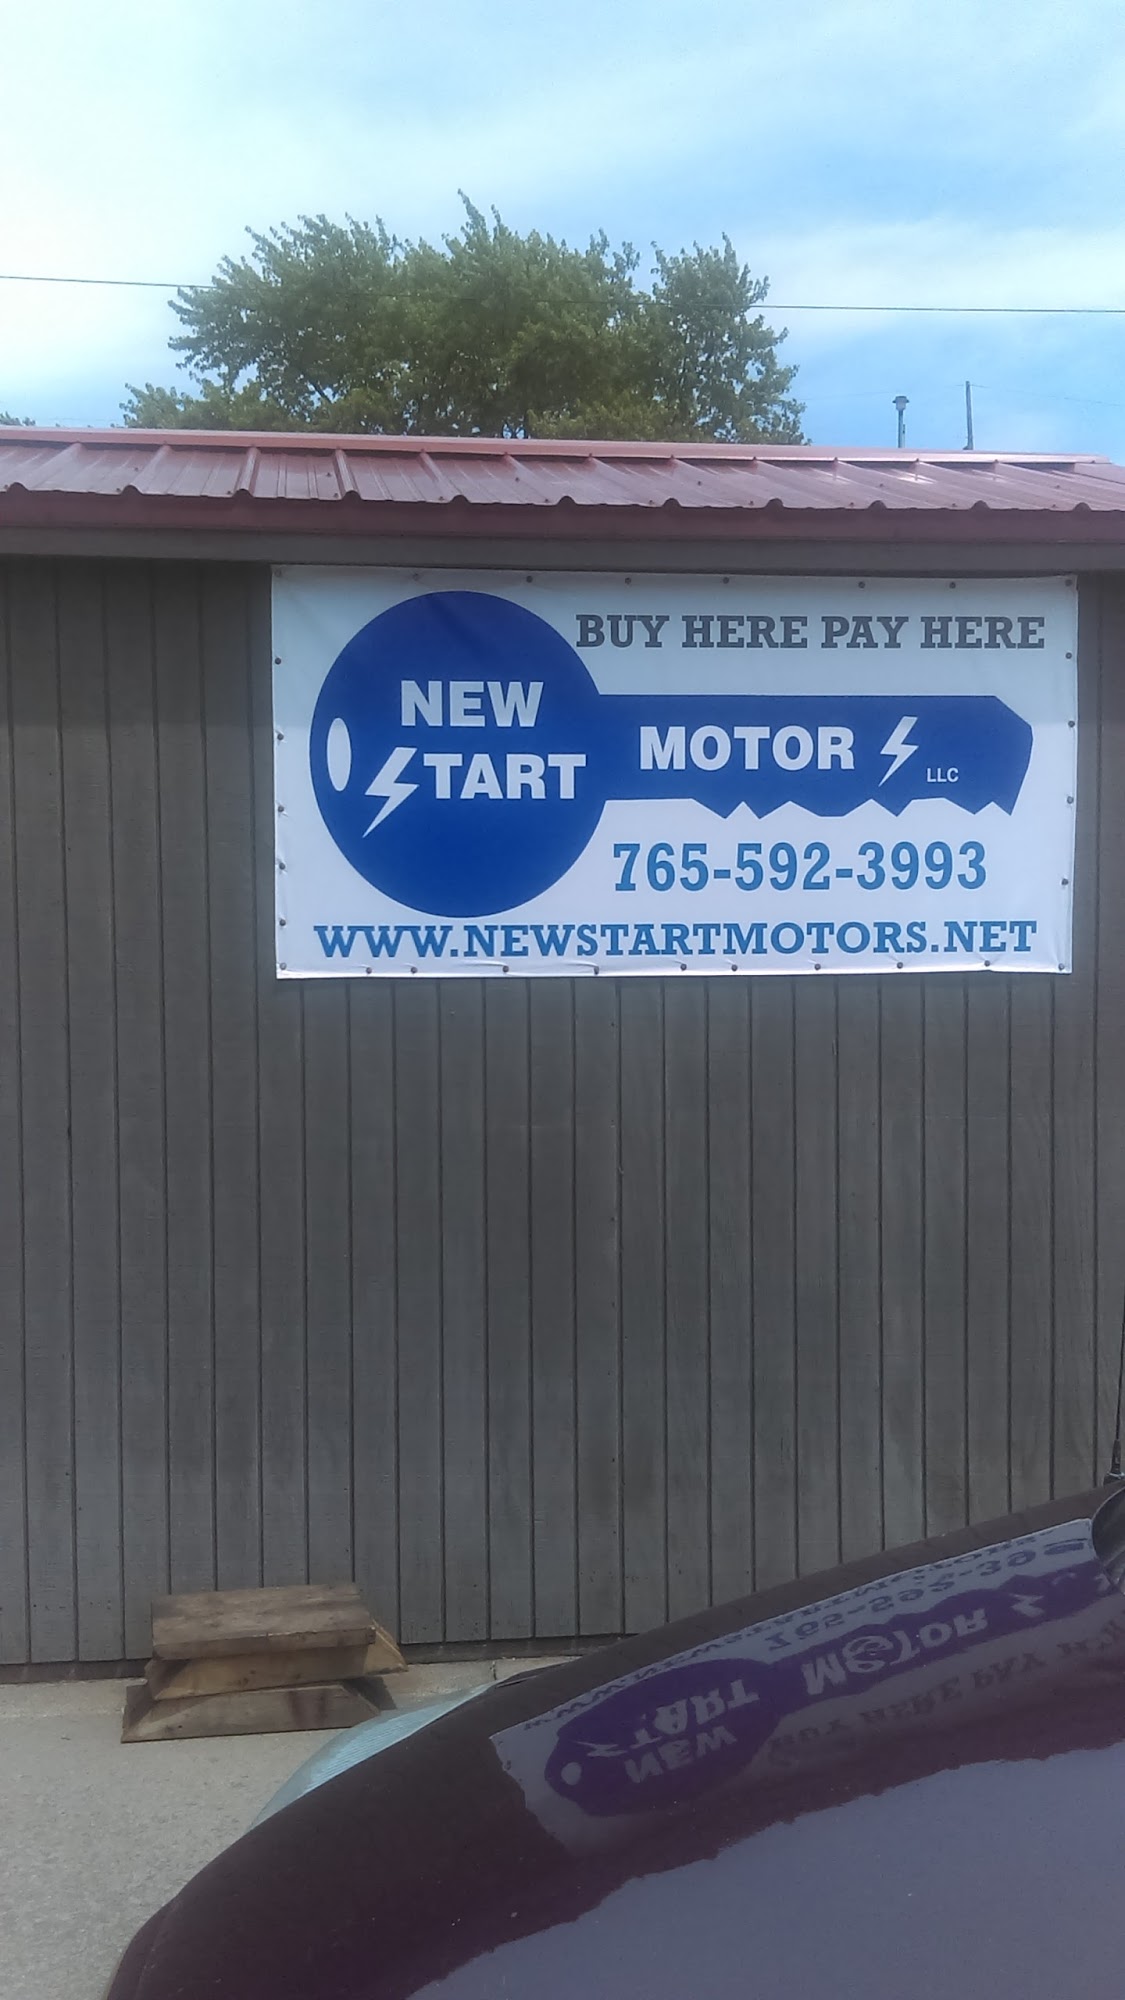 NEW START MOTORS LLC